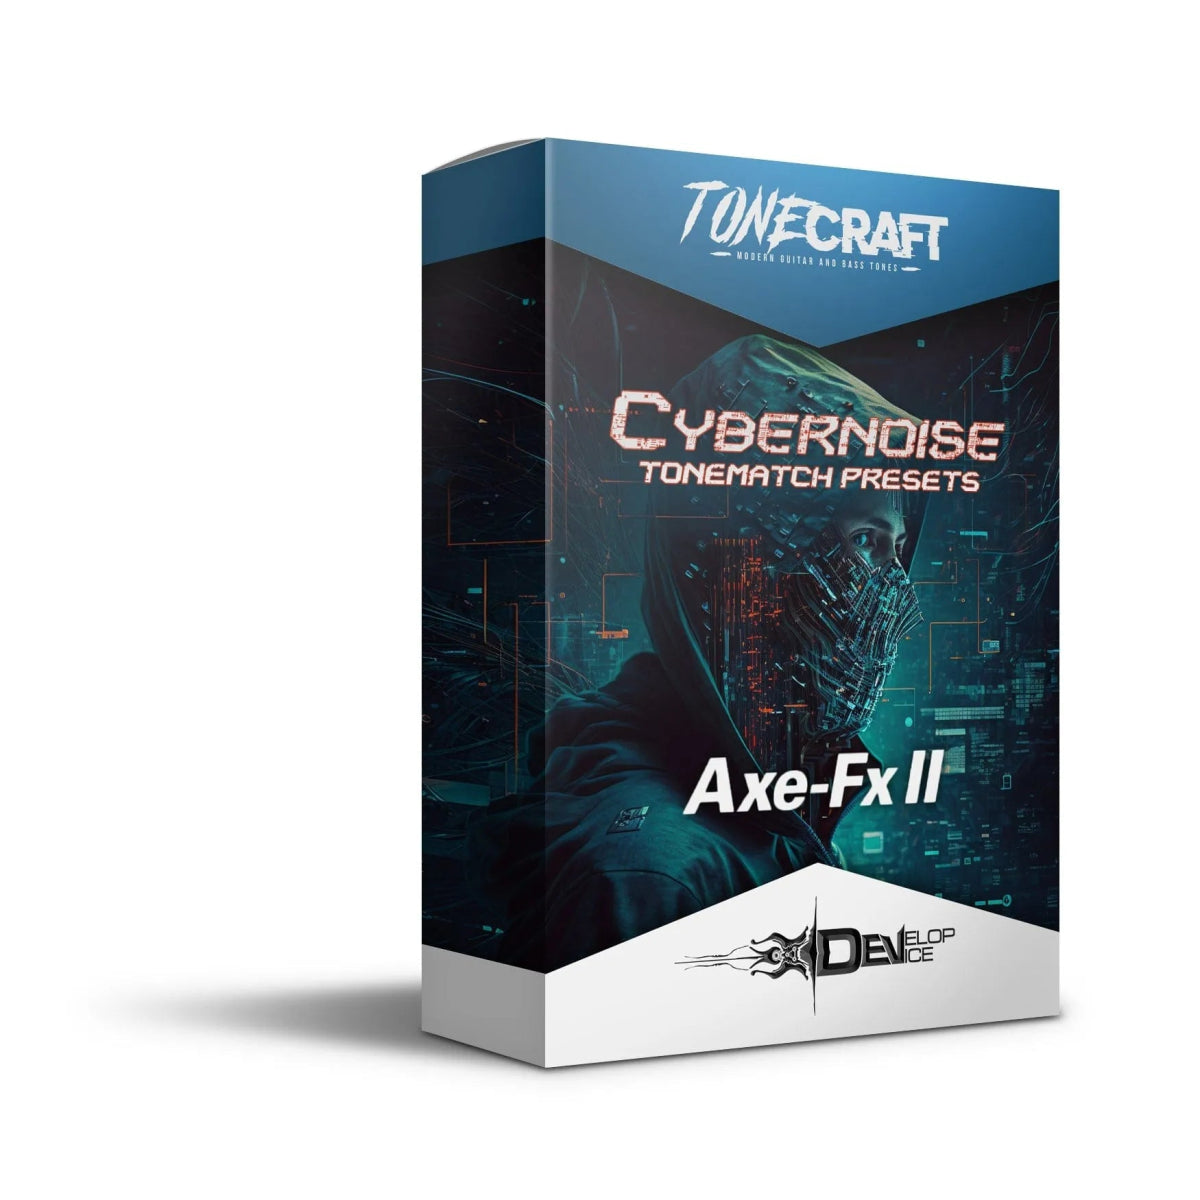 CyberNoise for Fractal Axe-Fx II - Fractal Axe Fx II Presets by Develop Device